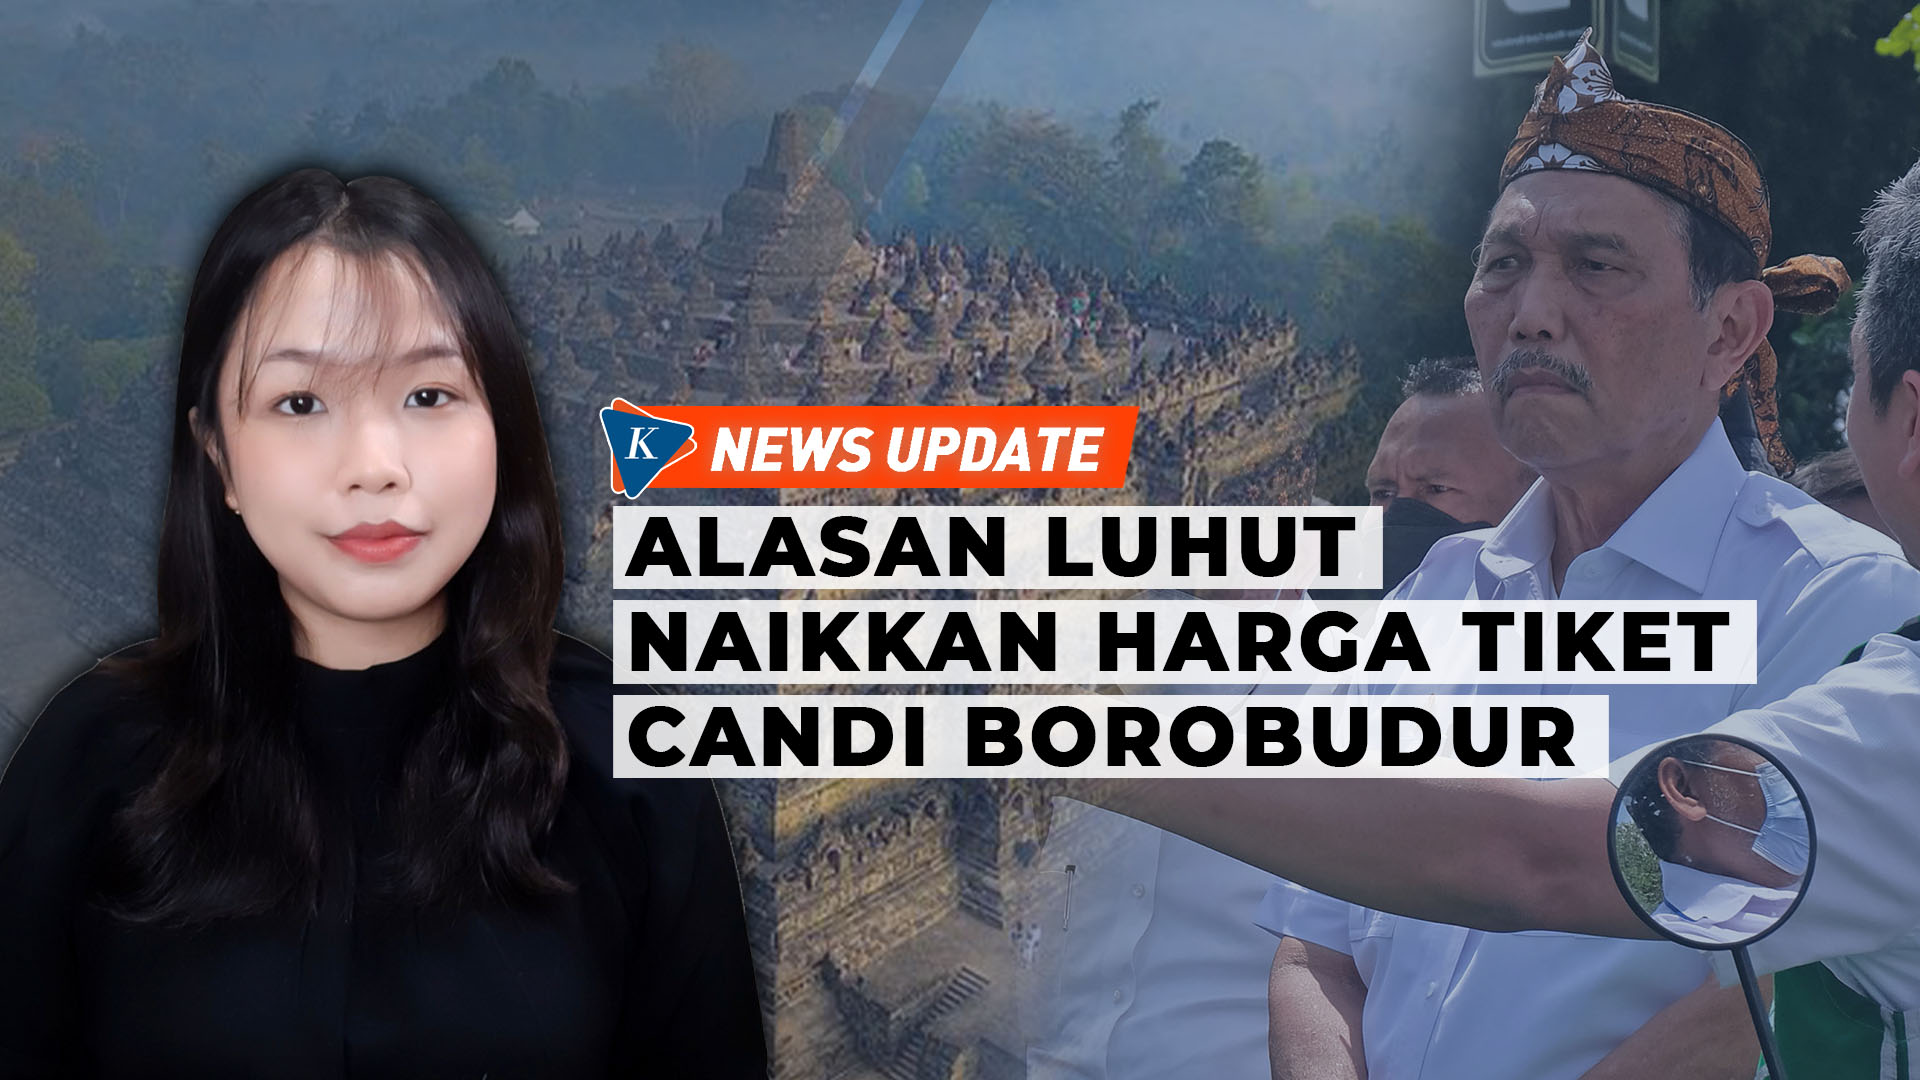 Luhut Pastikan Harga Tiket Naik ke Candi Borobudur untuk Turis Lokal Belum Final